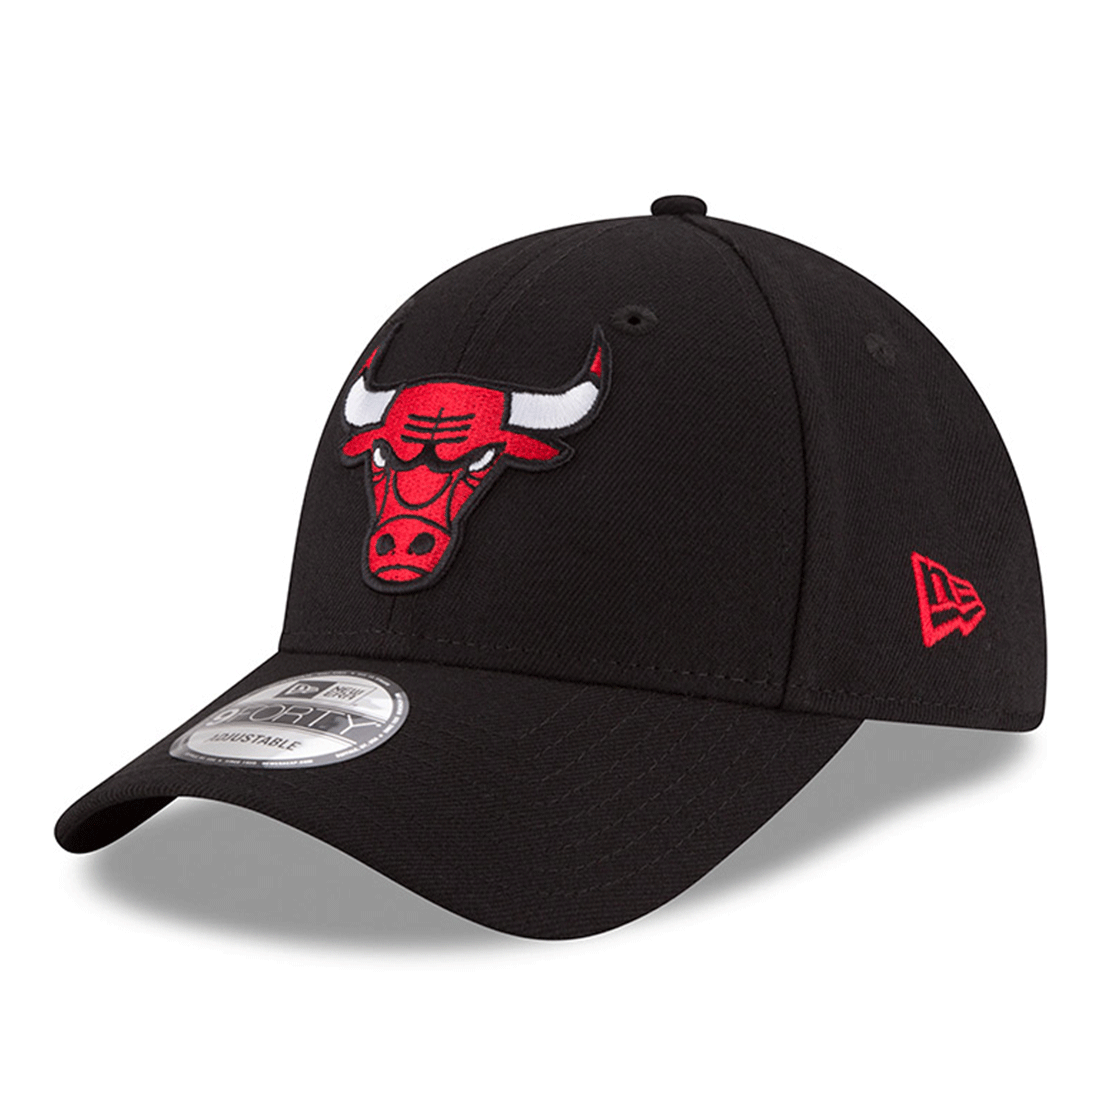 New Era cap - The League Chicago Bulls - Black